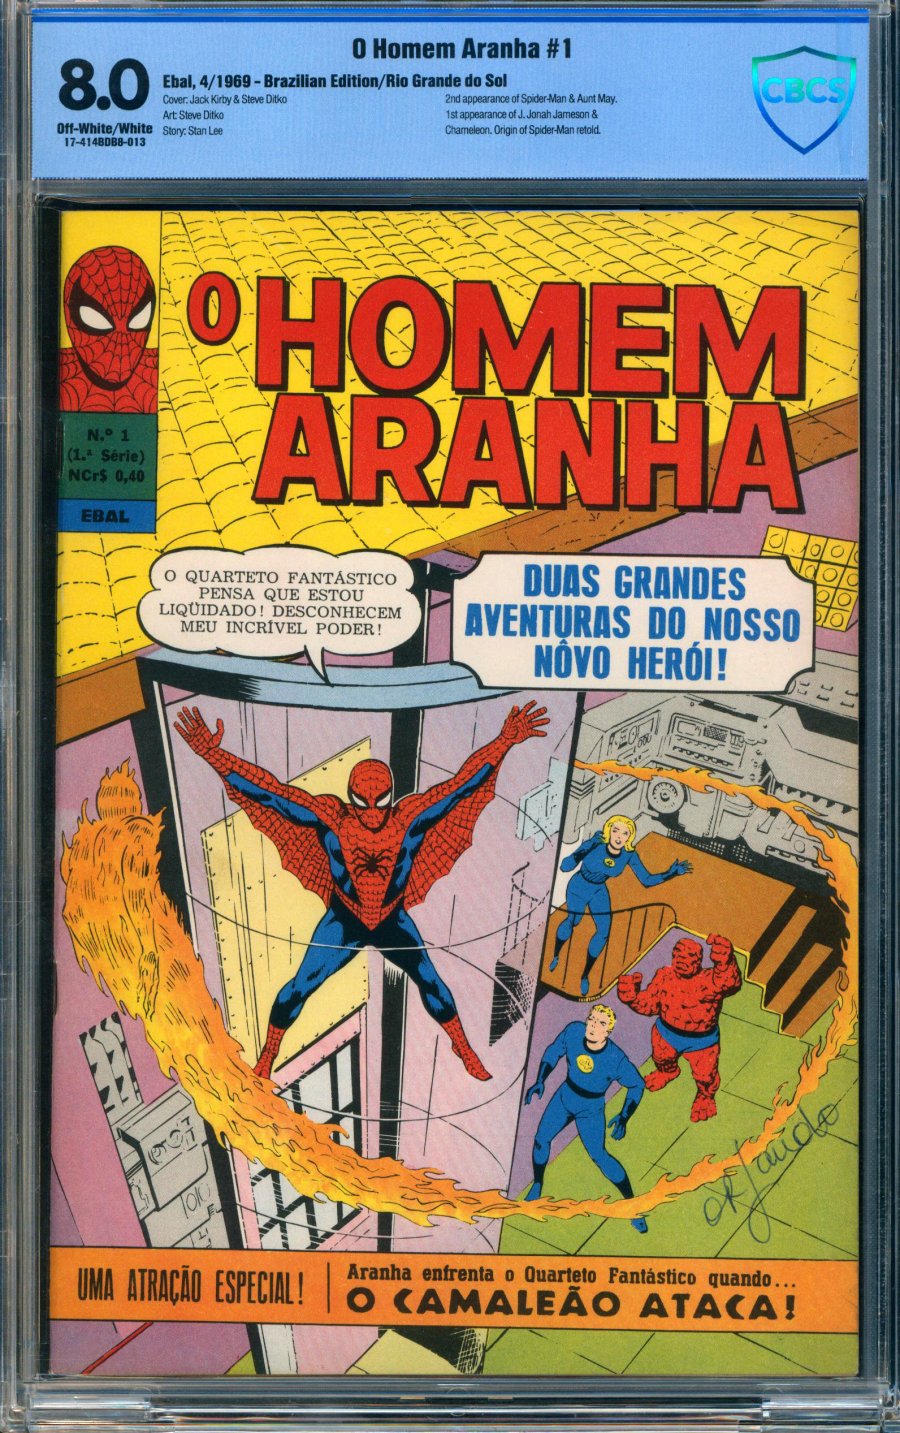 Spider-Man Brasil 🕸️ on X: O Superior Homem-Aranha (2013